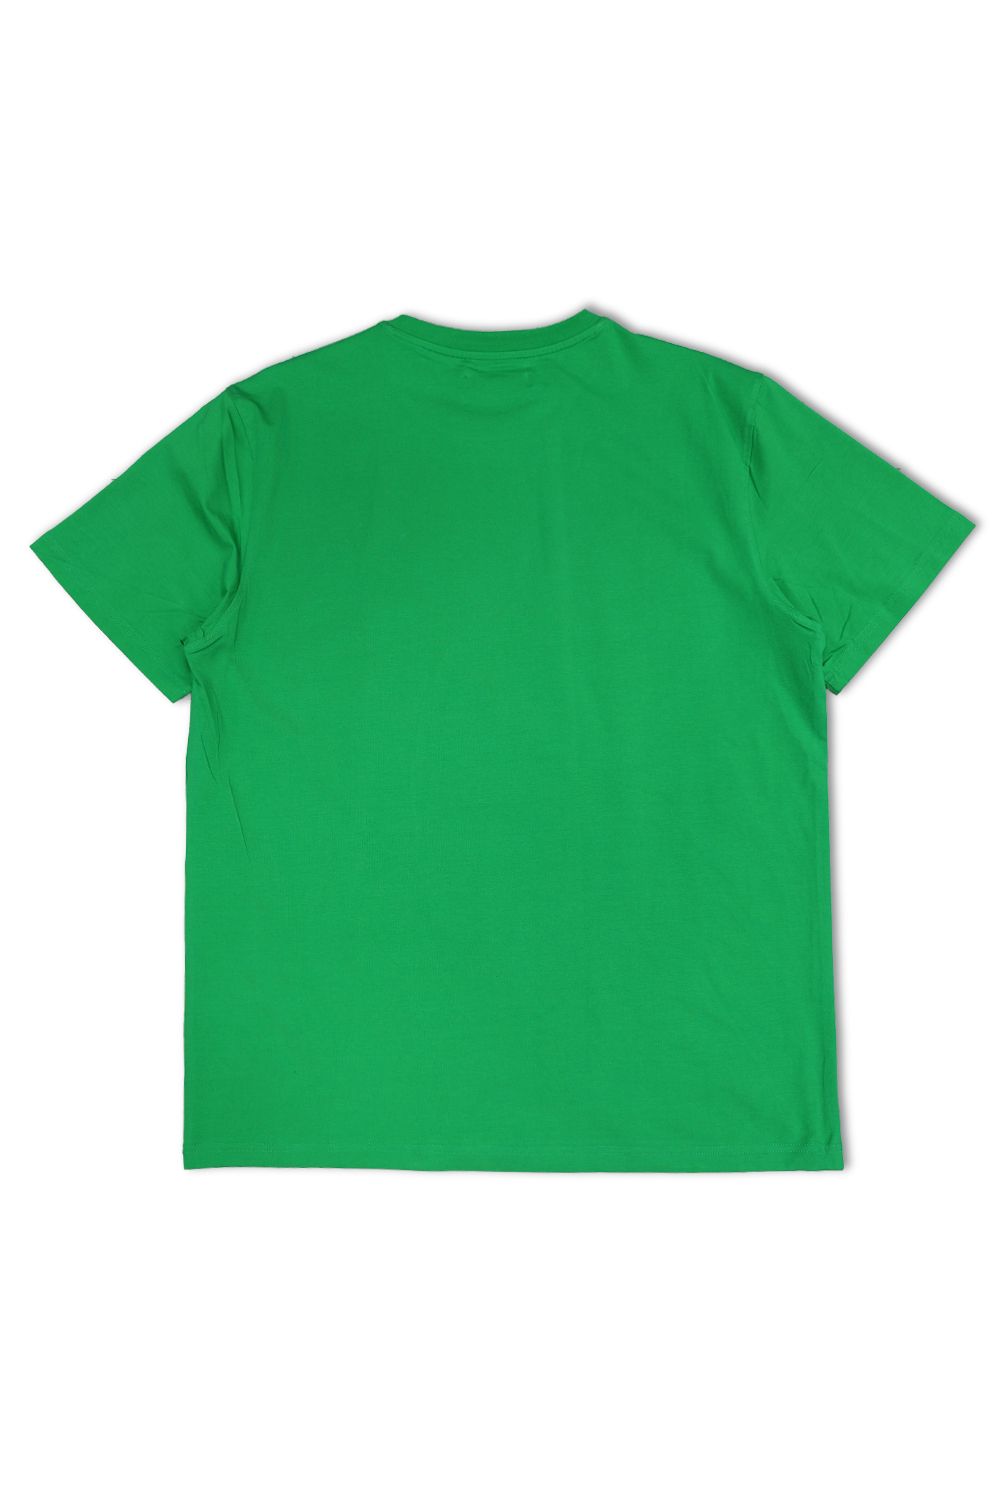 Roku Studio -Fallen Angel T - Shirt -Green